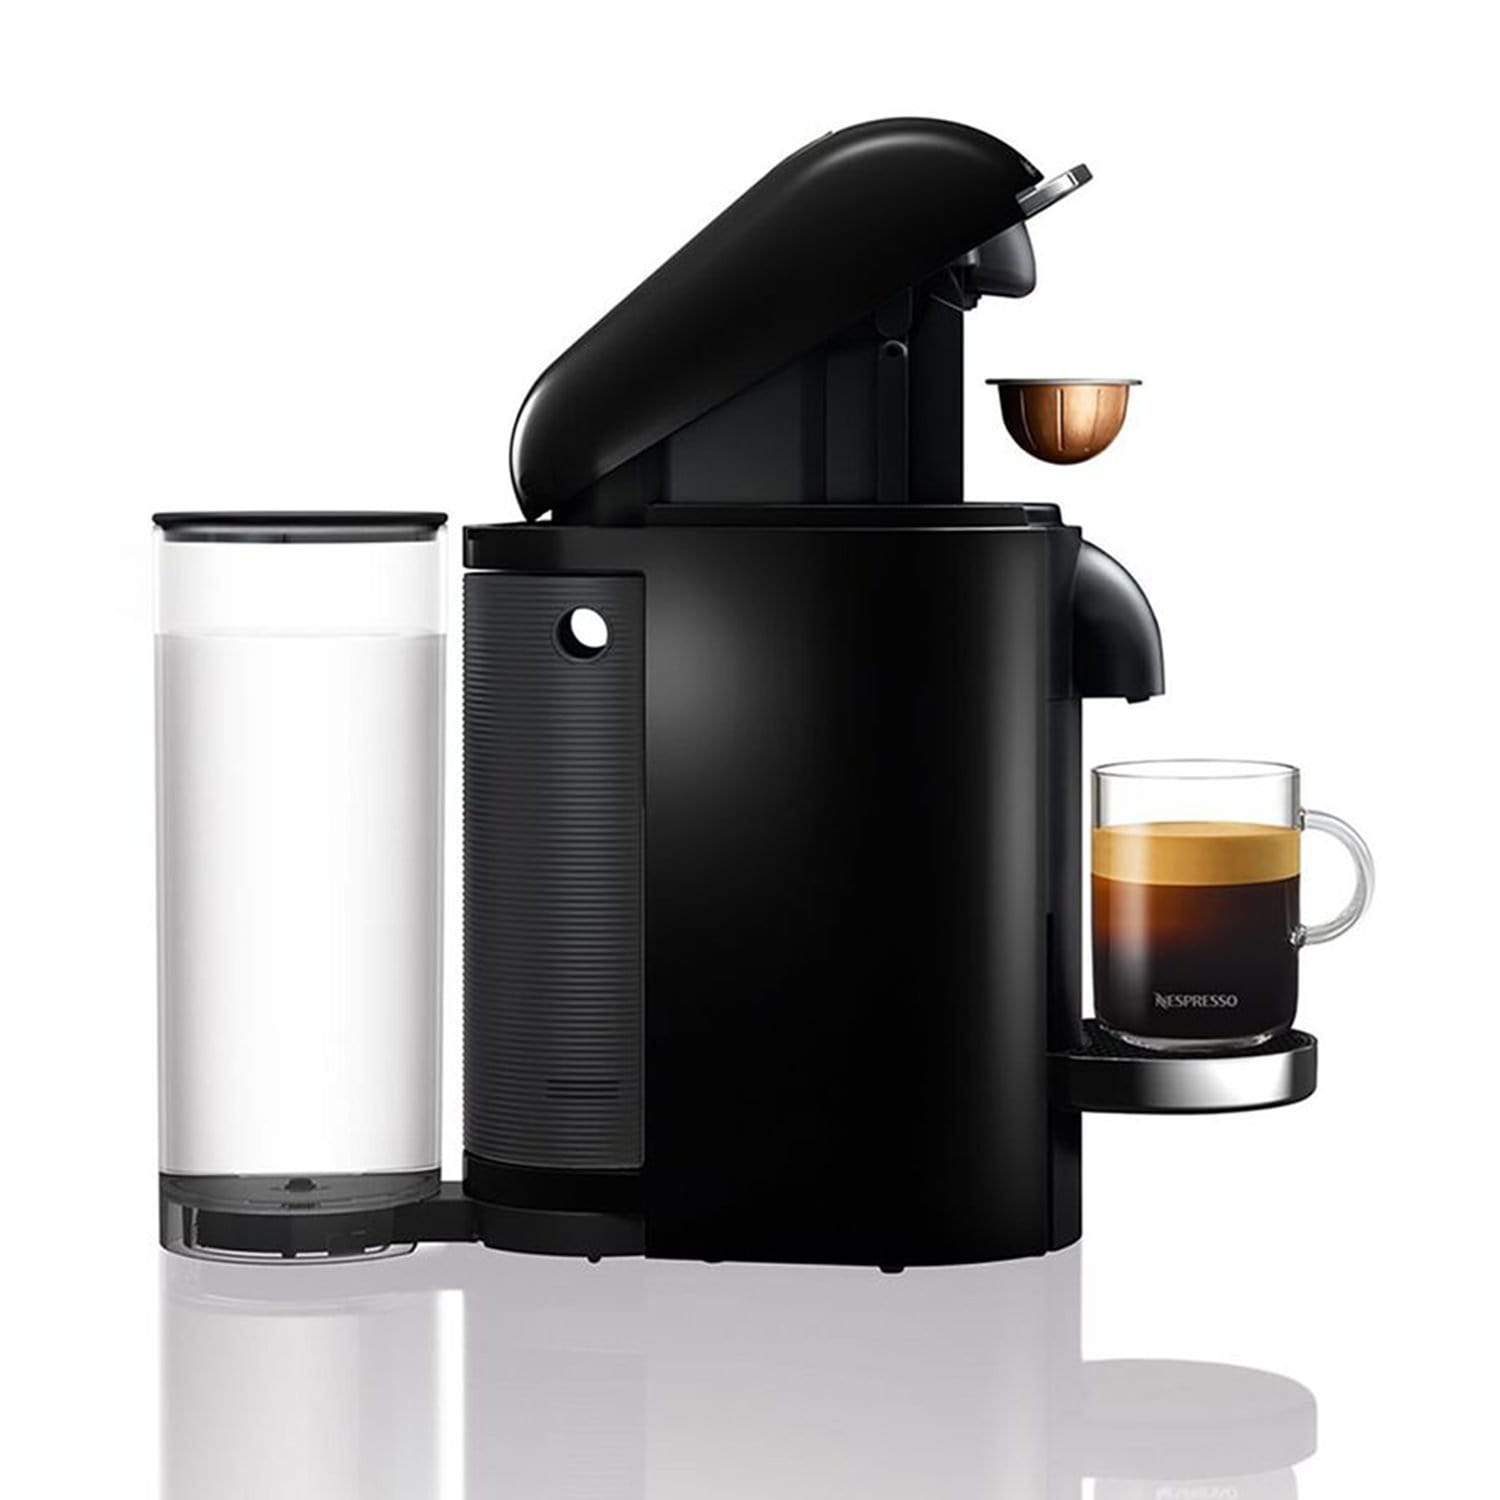 Nespresso ماكينة صنع القهوة فيرتو بلس - أسود ديلوكس - GCB2-GB-BK-NE1 - جاشنمال هوم